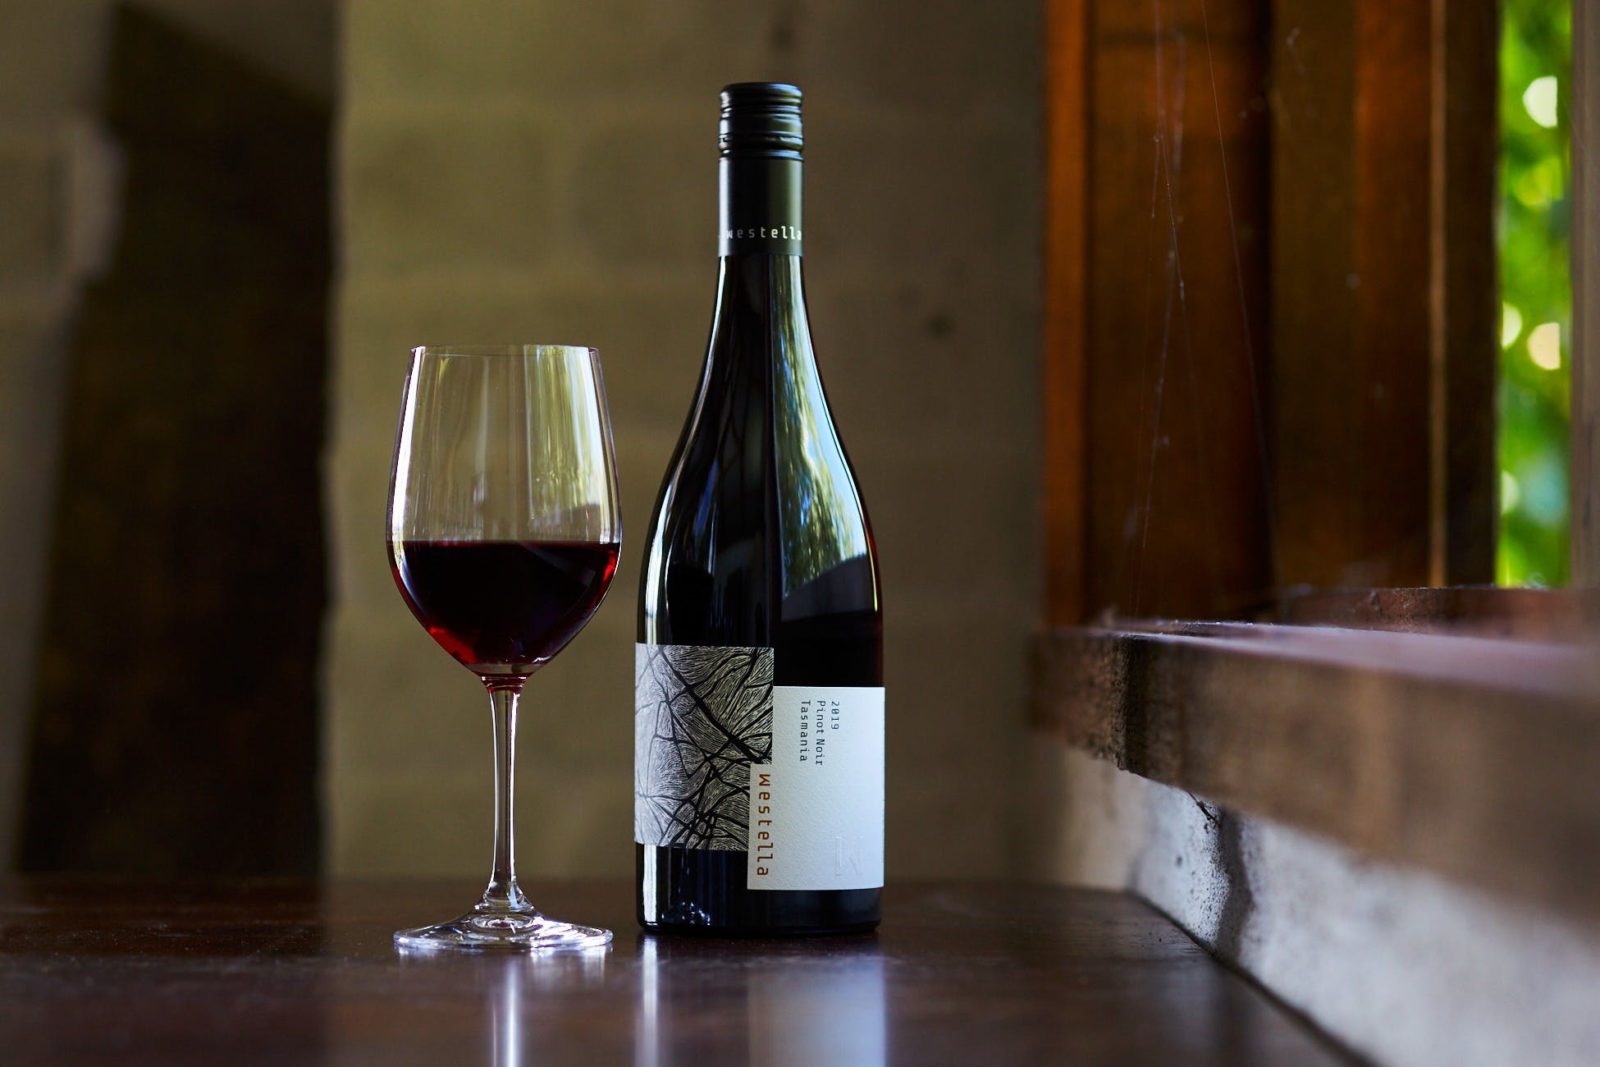 Westella 2019 Pinot Noir and Glass